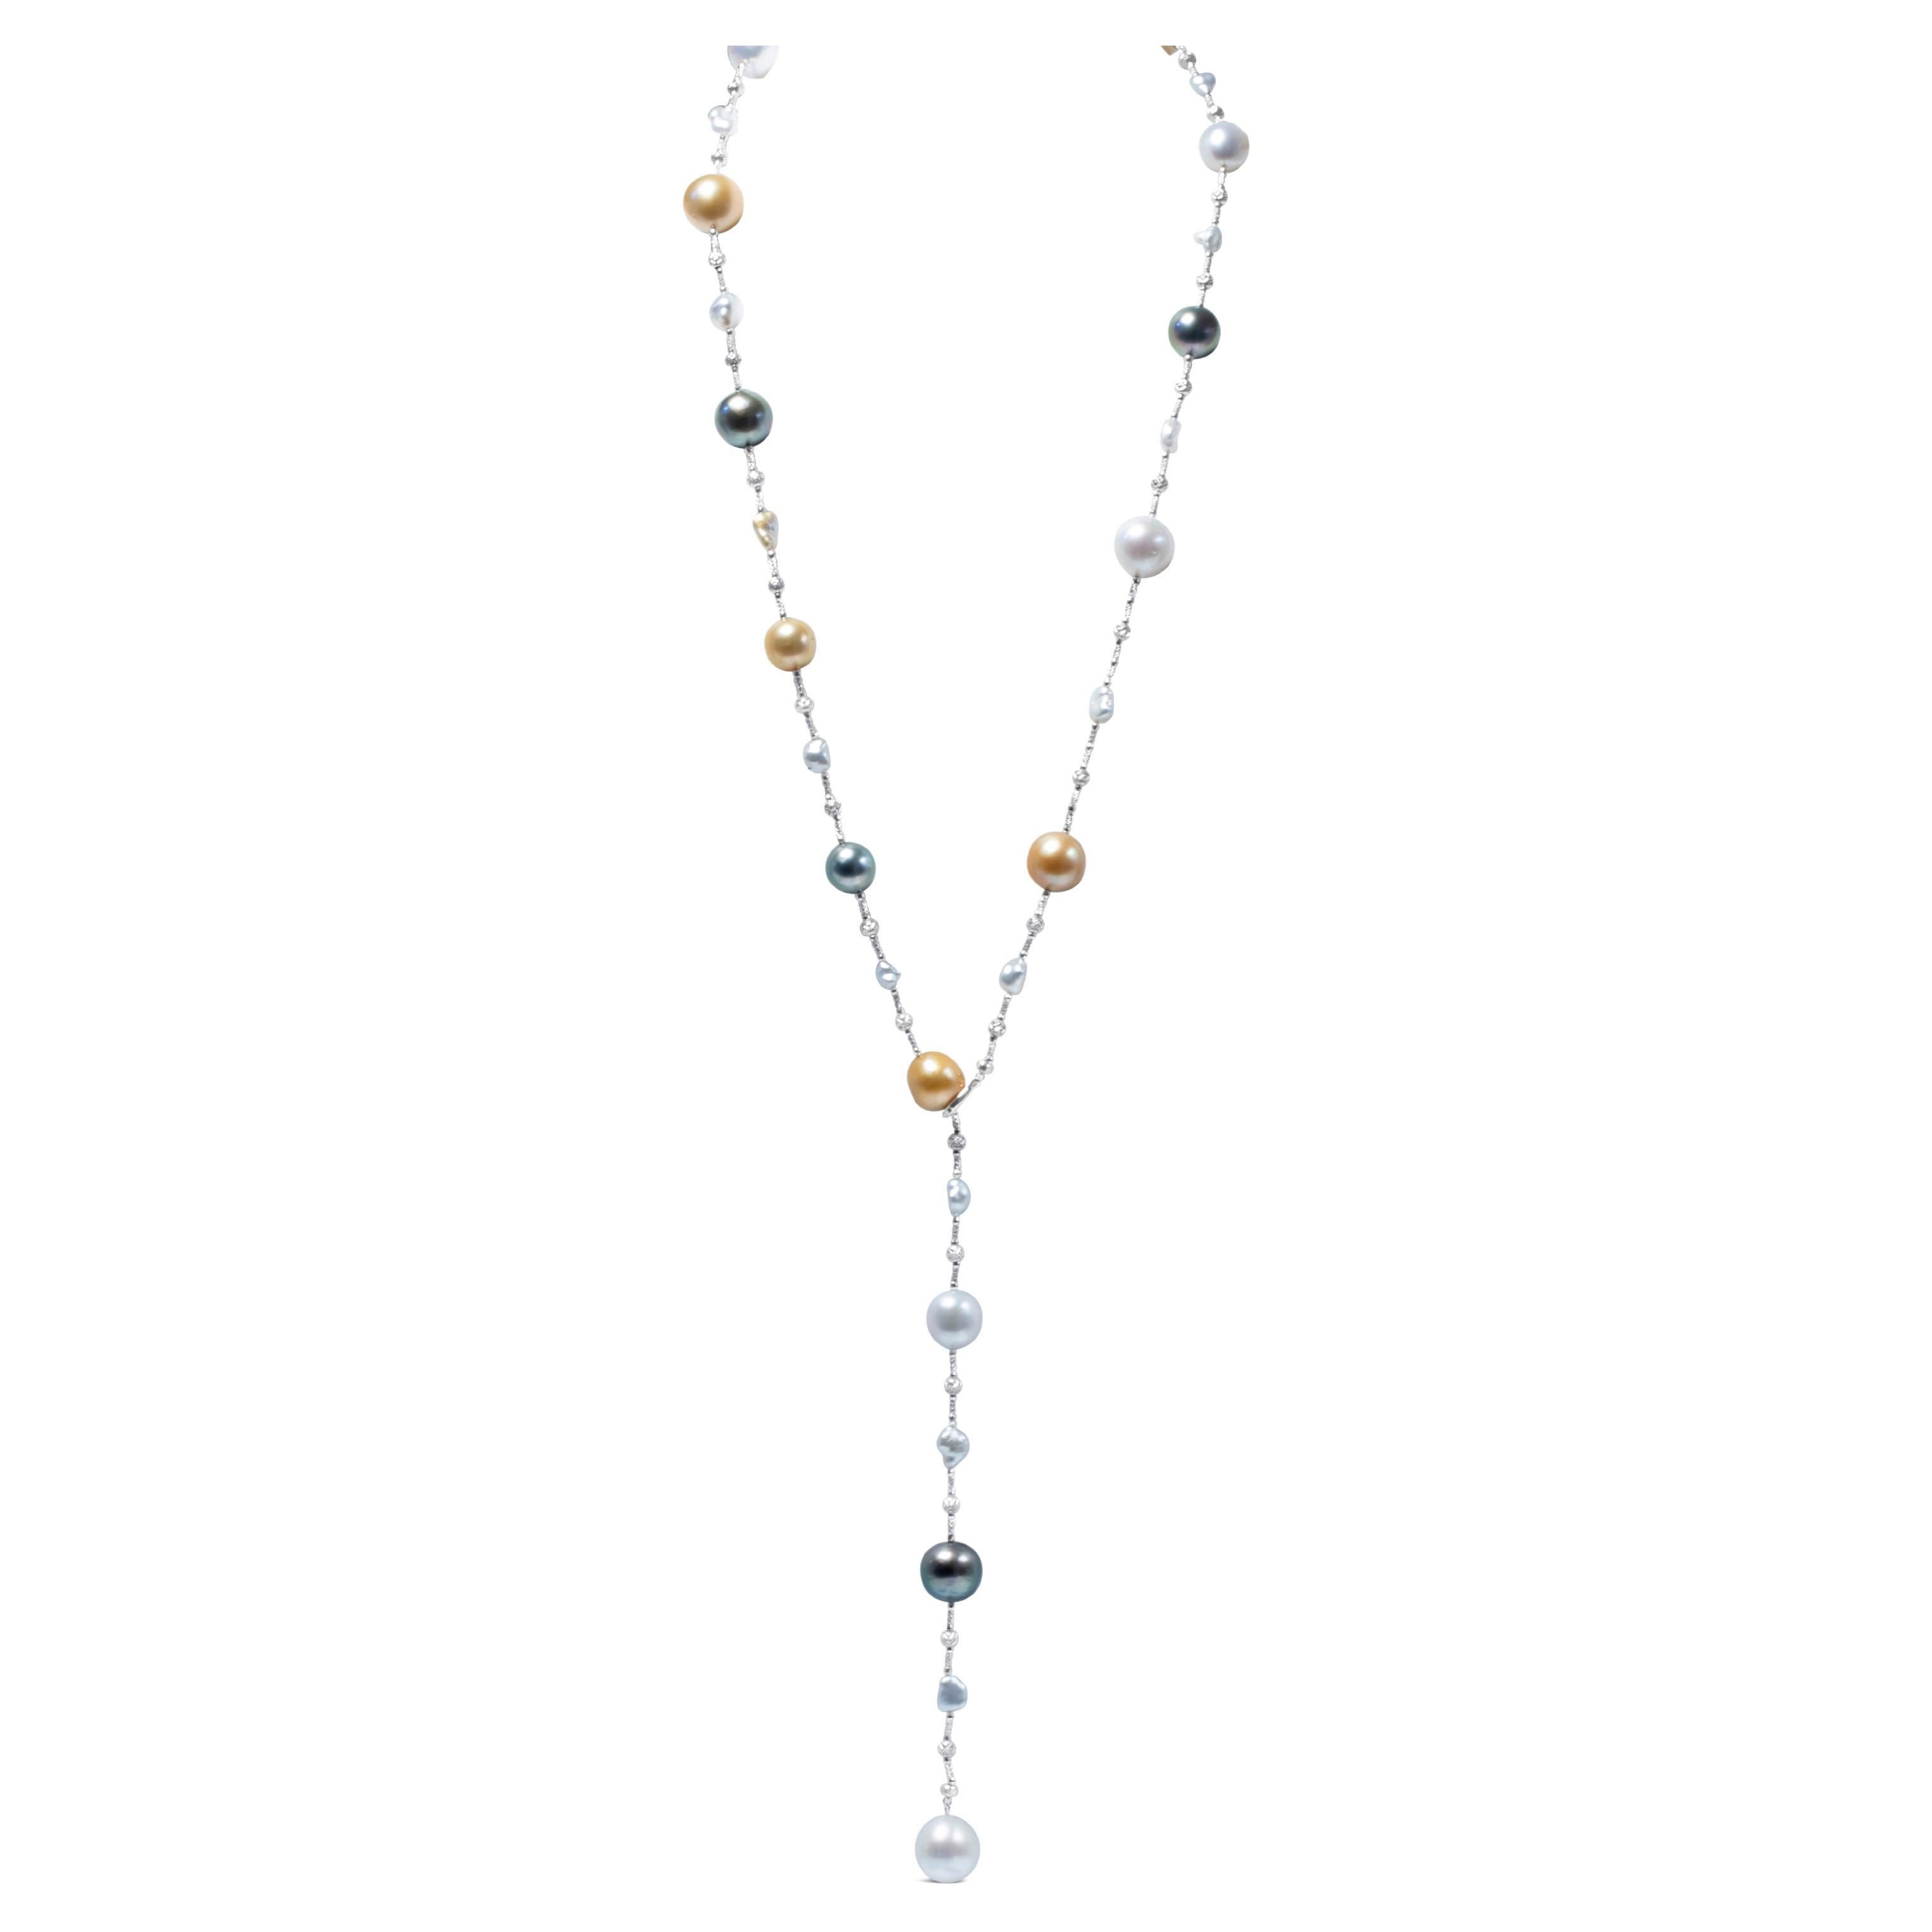 Roman Malakov Multi-Color South Sea and Tahitian Pearl Necklace